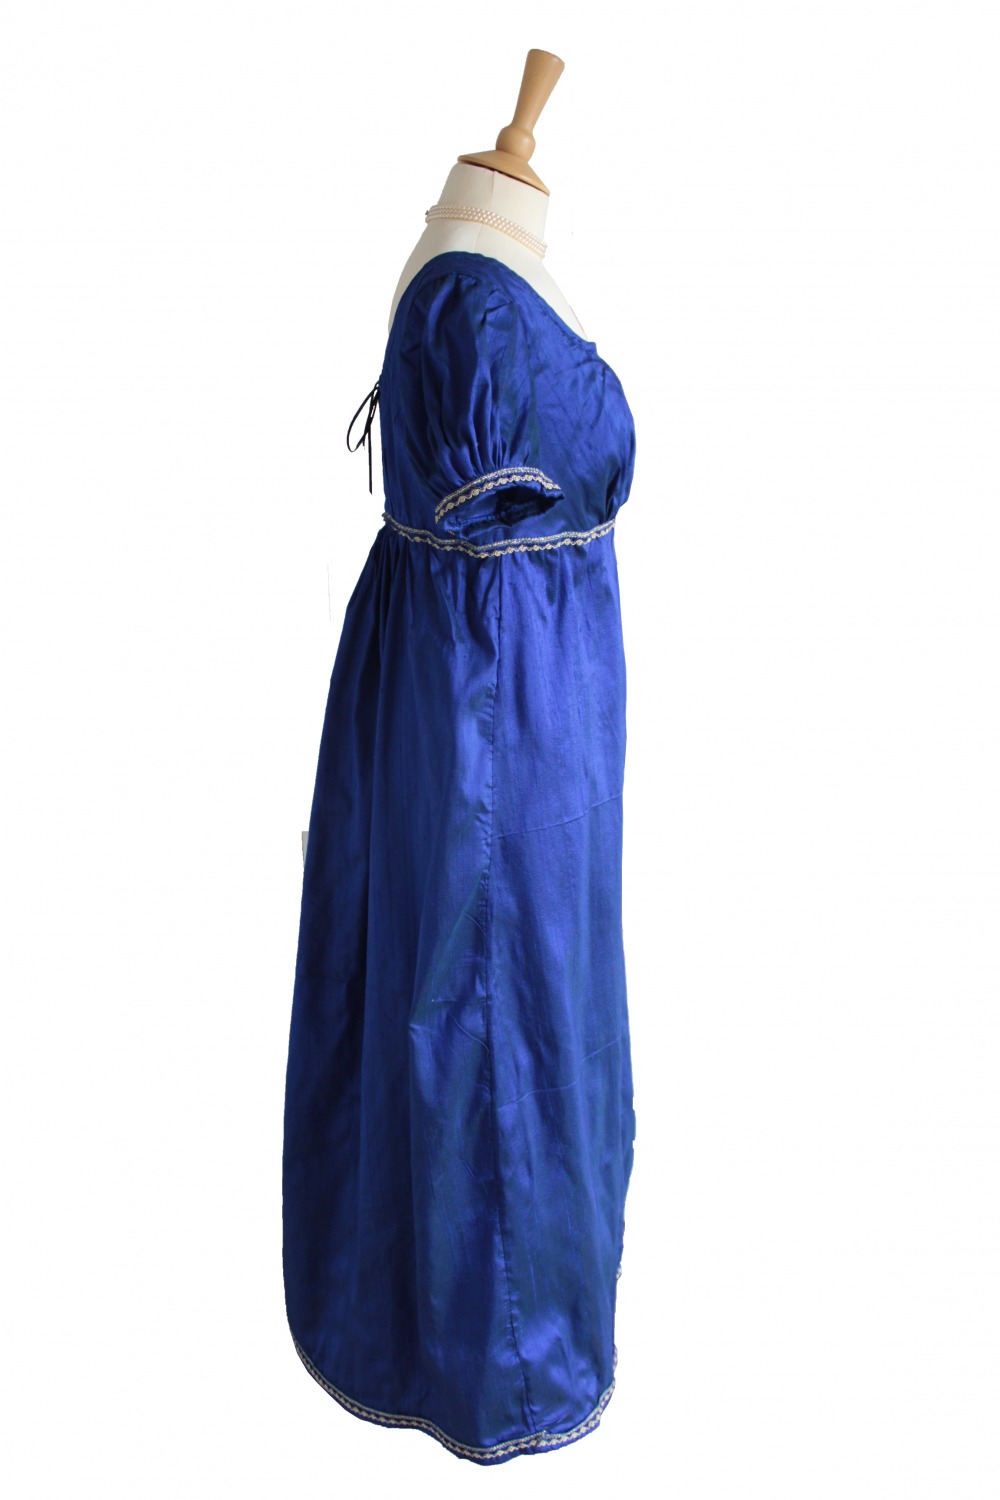 Ladies/ Older Girl's 19th Century Petite Jane Austen Regency Day Gown Costume Size 10 - 12 Image